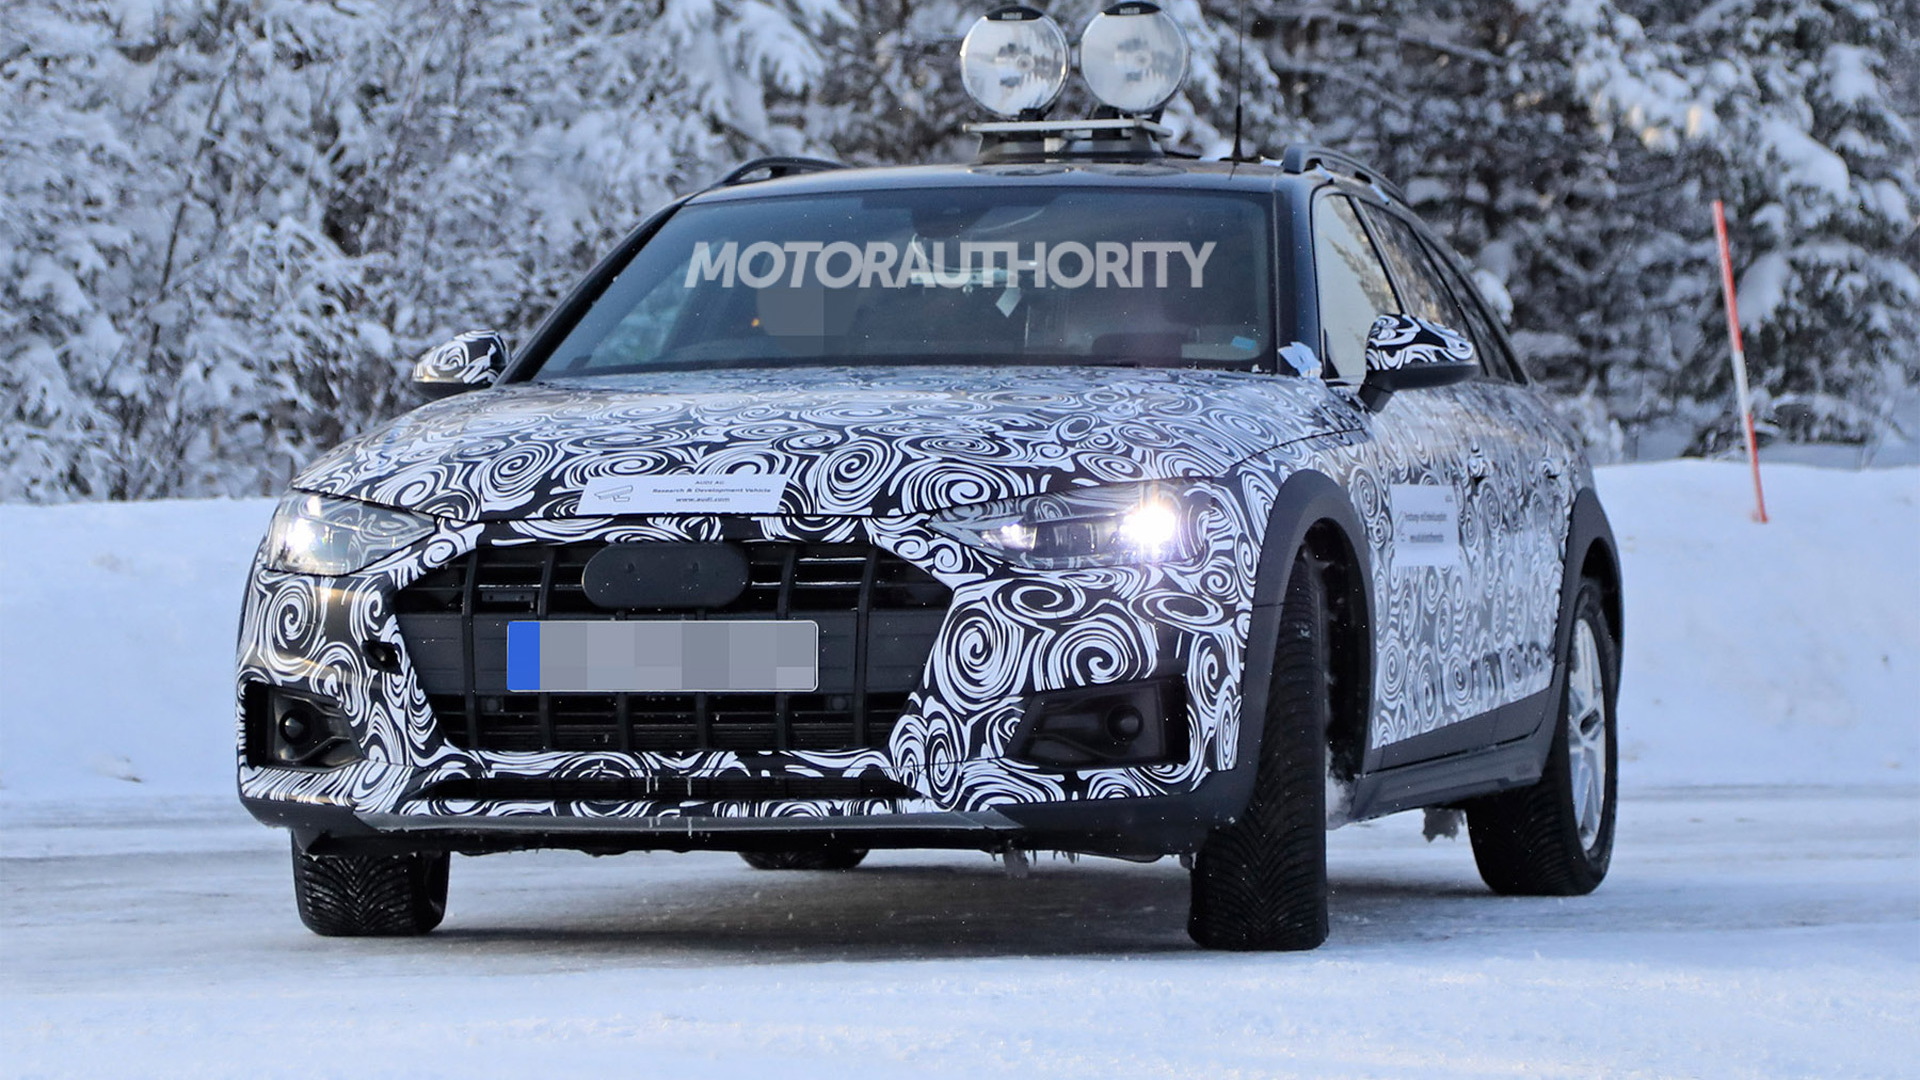 2021 Audi A4 Allroad facelift spy shots - Image via S. Baldauf/SB-Medien